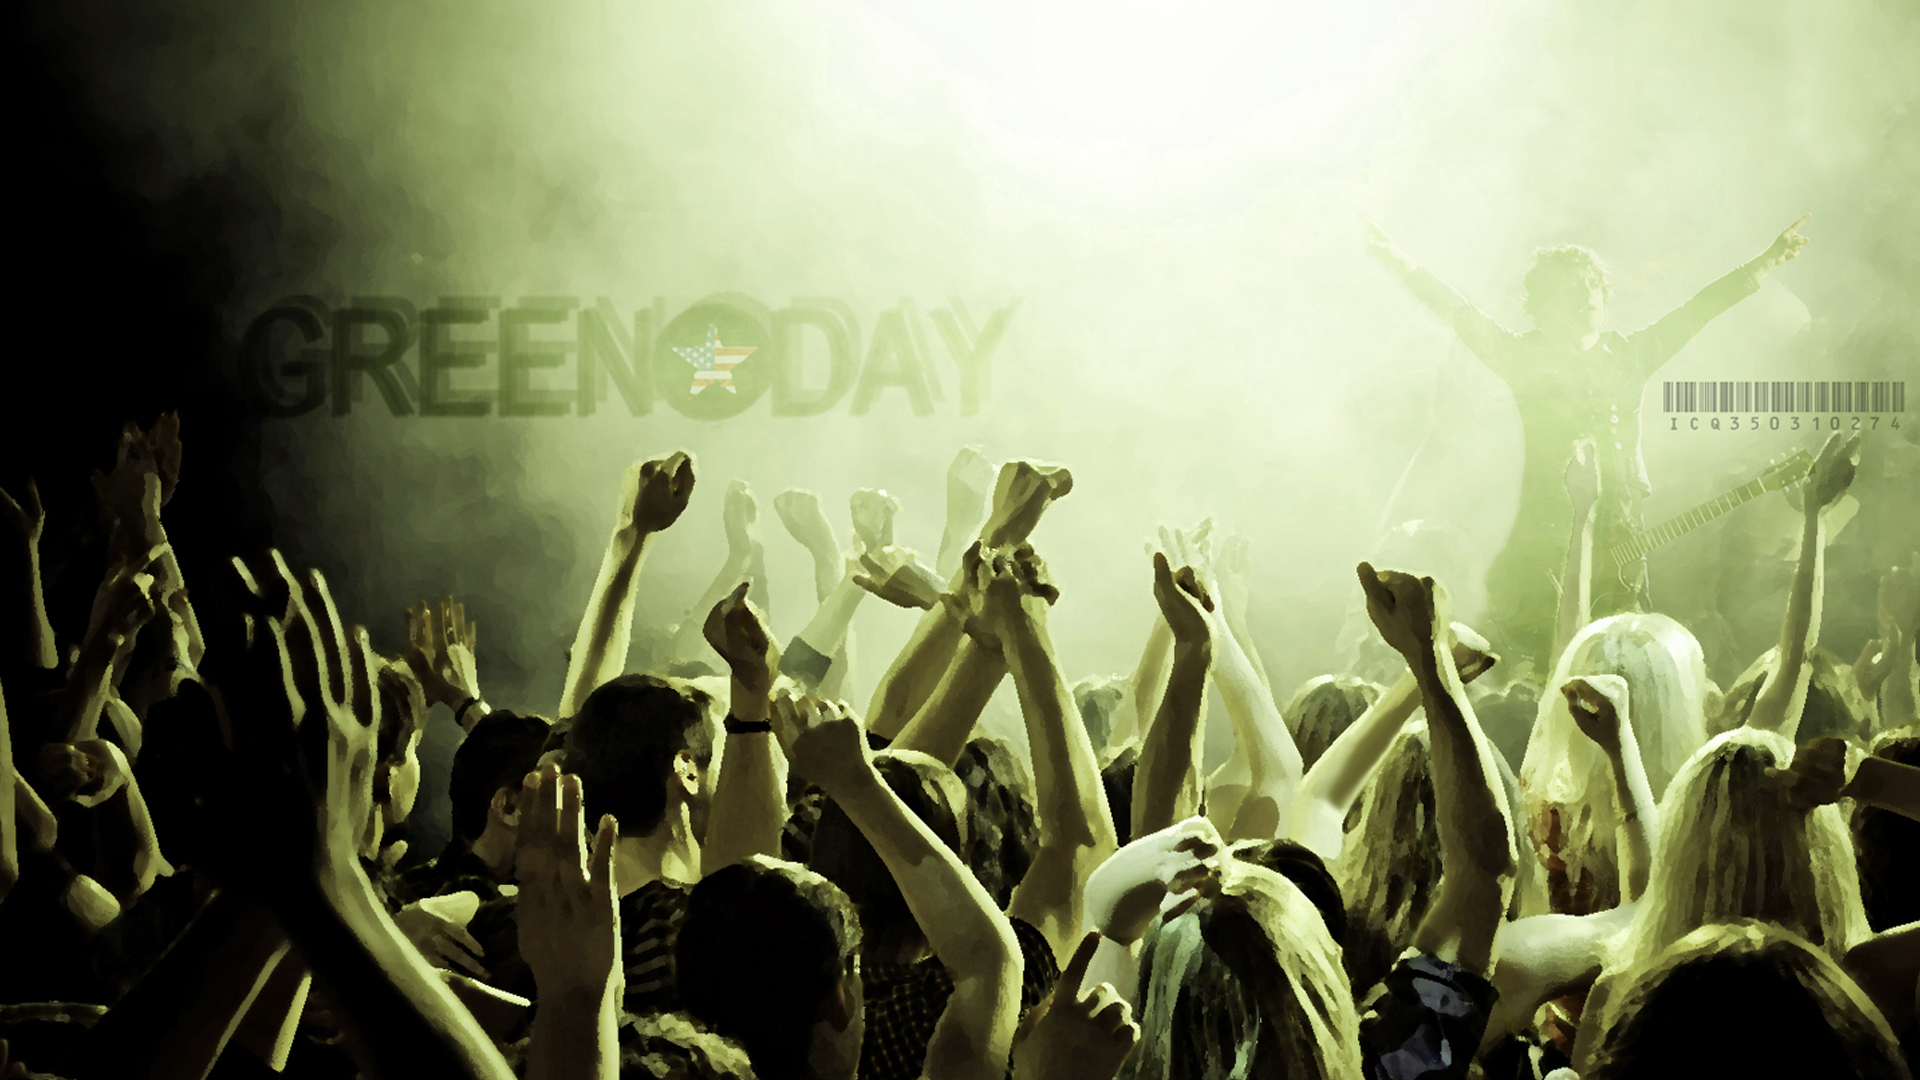 green day, music